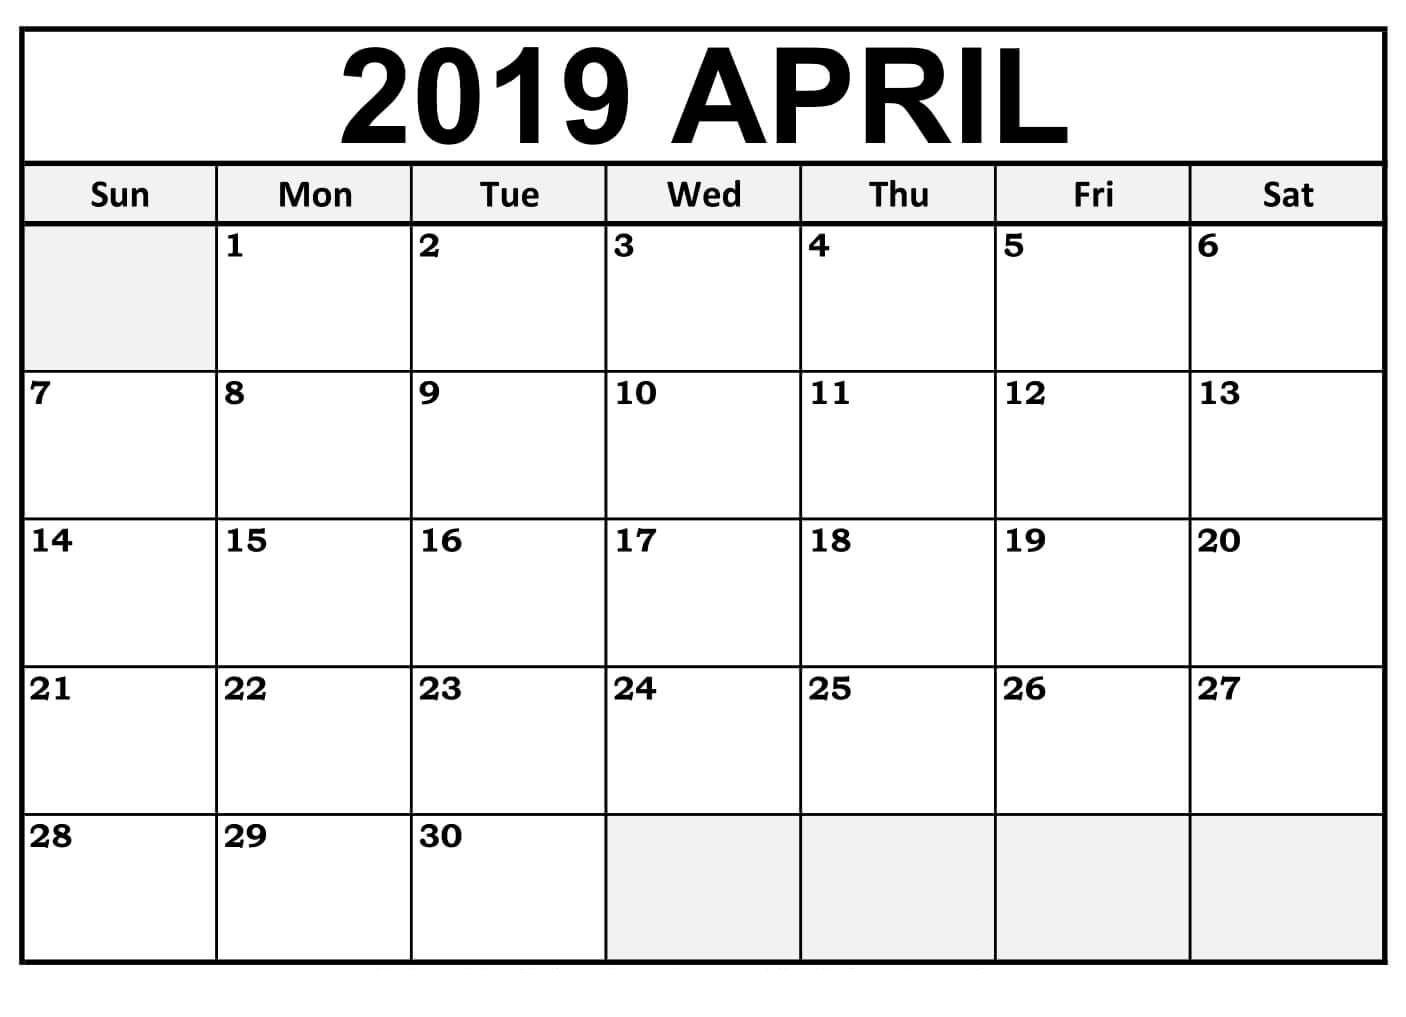 April 2019 Calendar Printable Free Download - Free Printable